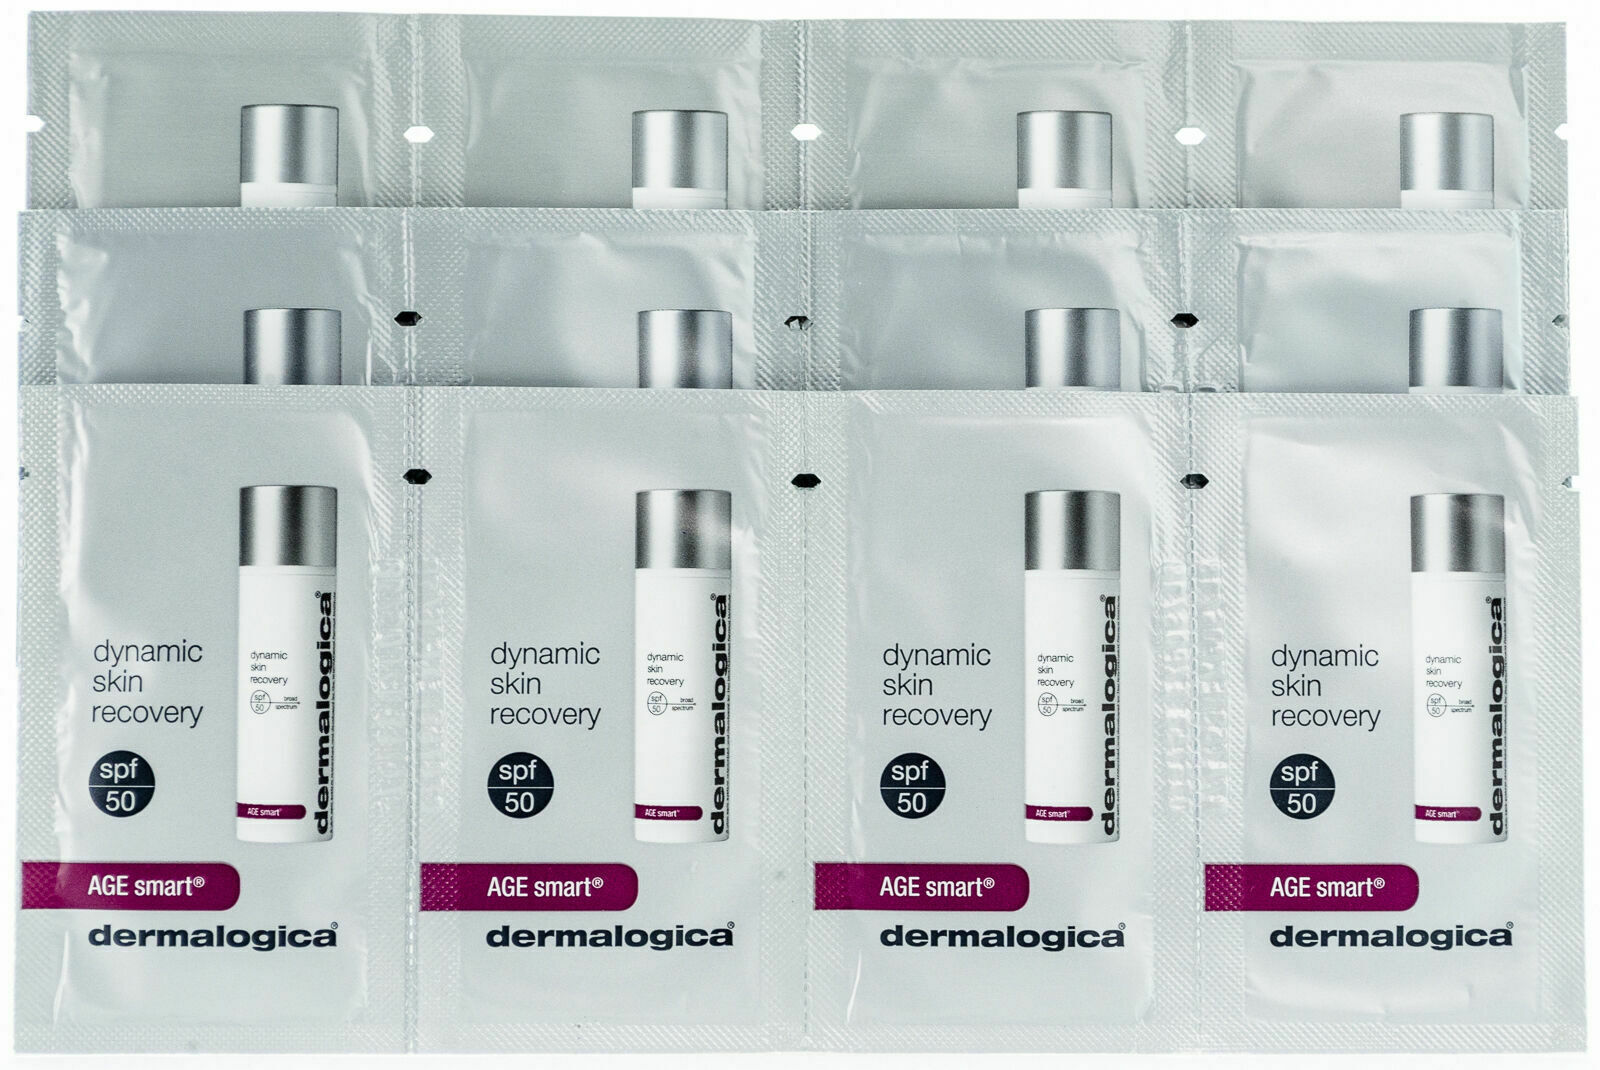 12x Dermalogica Dynamic Skin Recovery TRAVEL SET  1ML EA TOTAL 12ML!! - $9.50